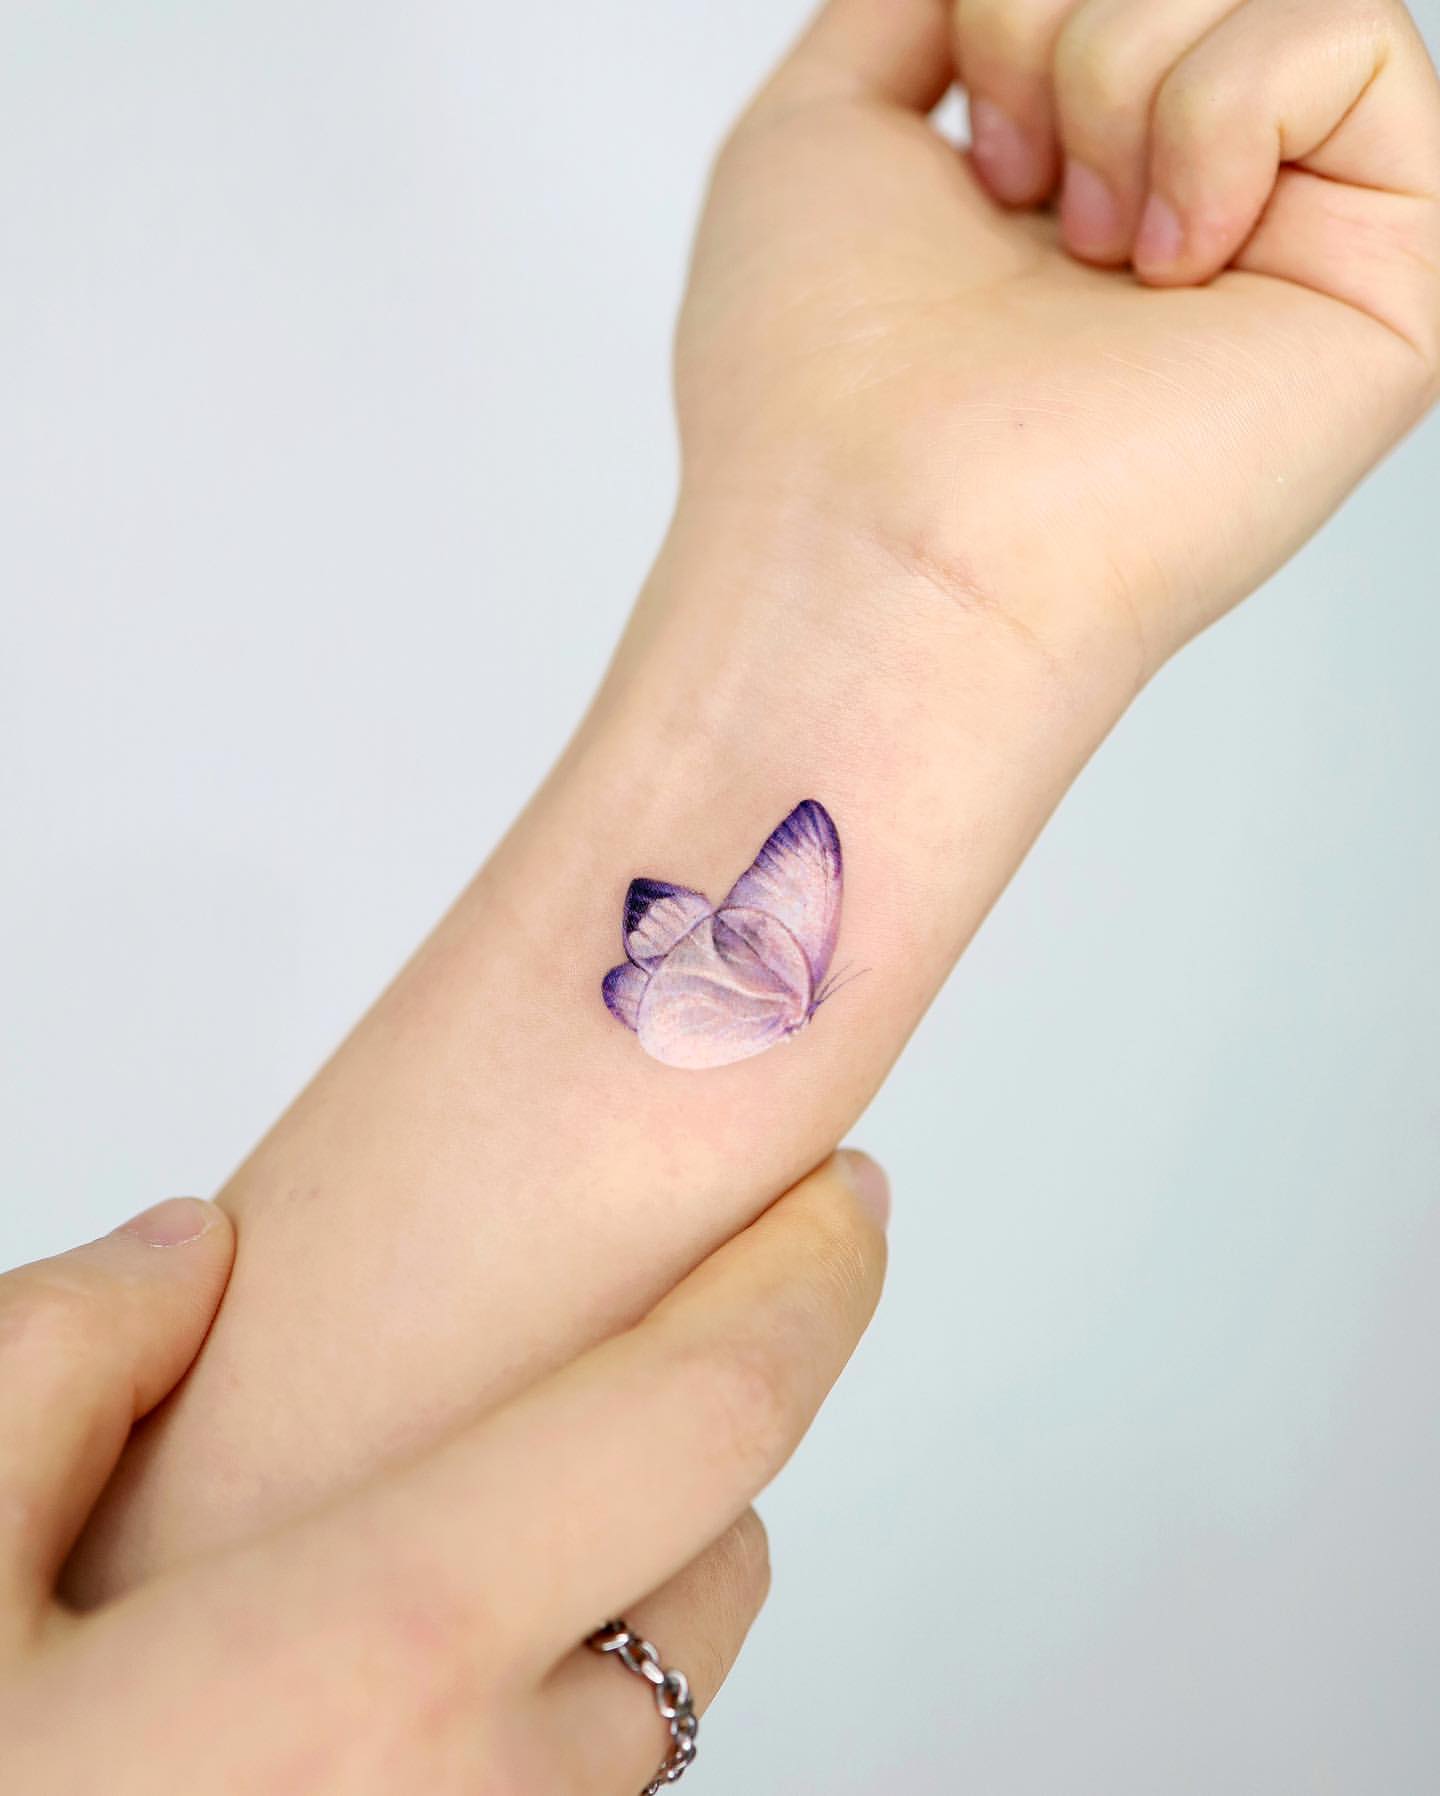 Wrist Tattoo Ideas for Women 6